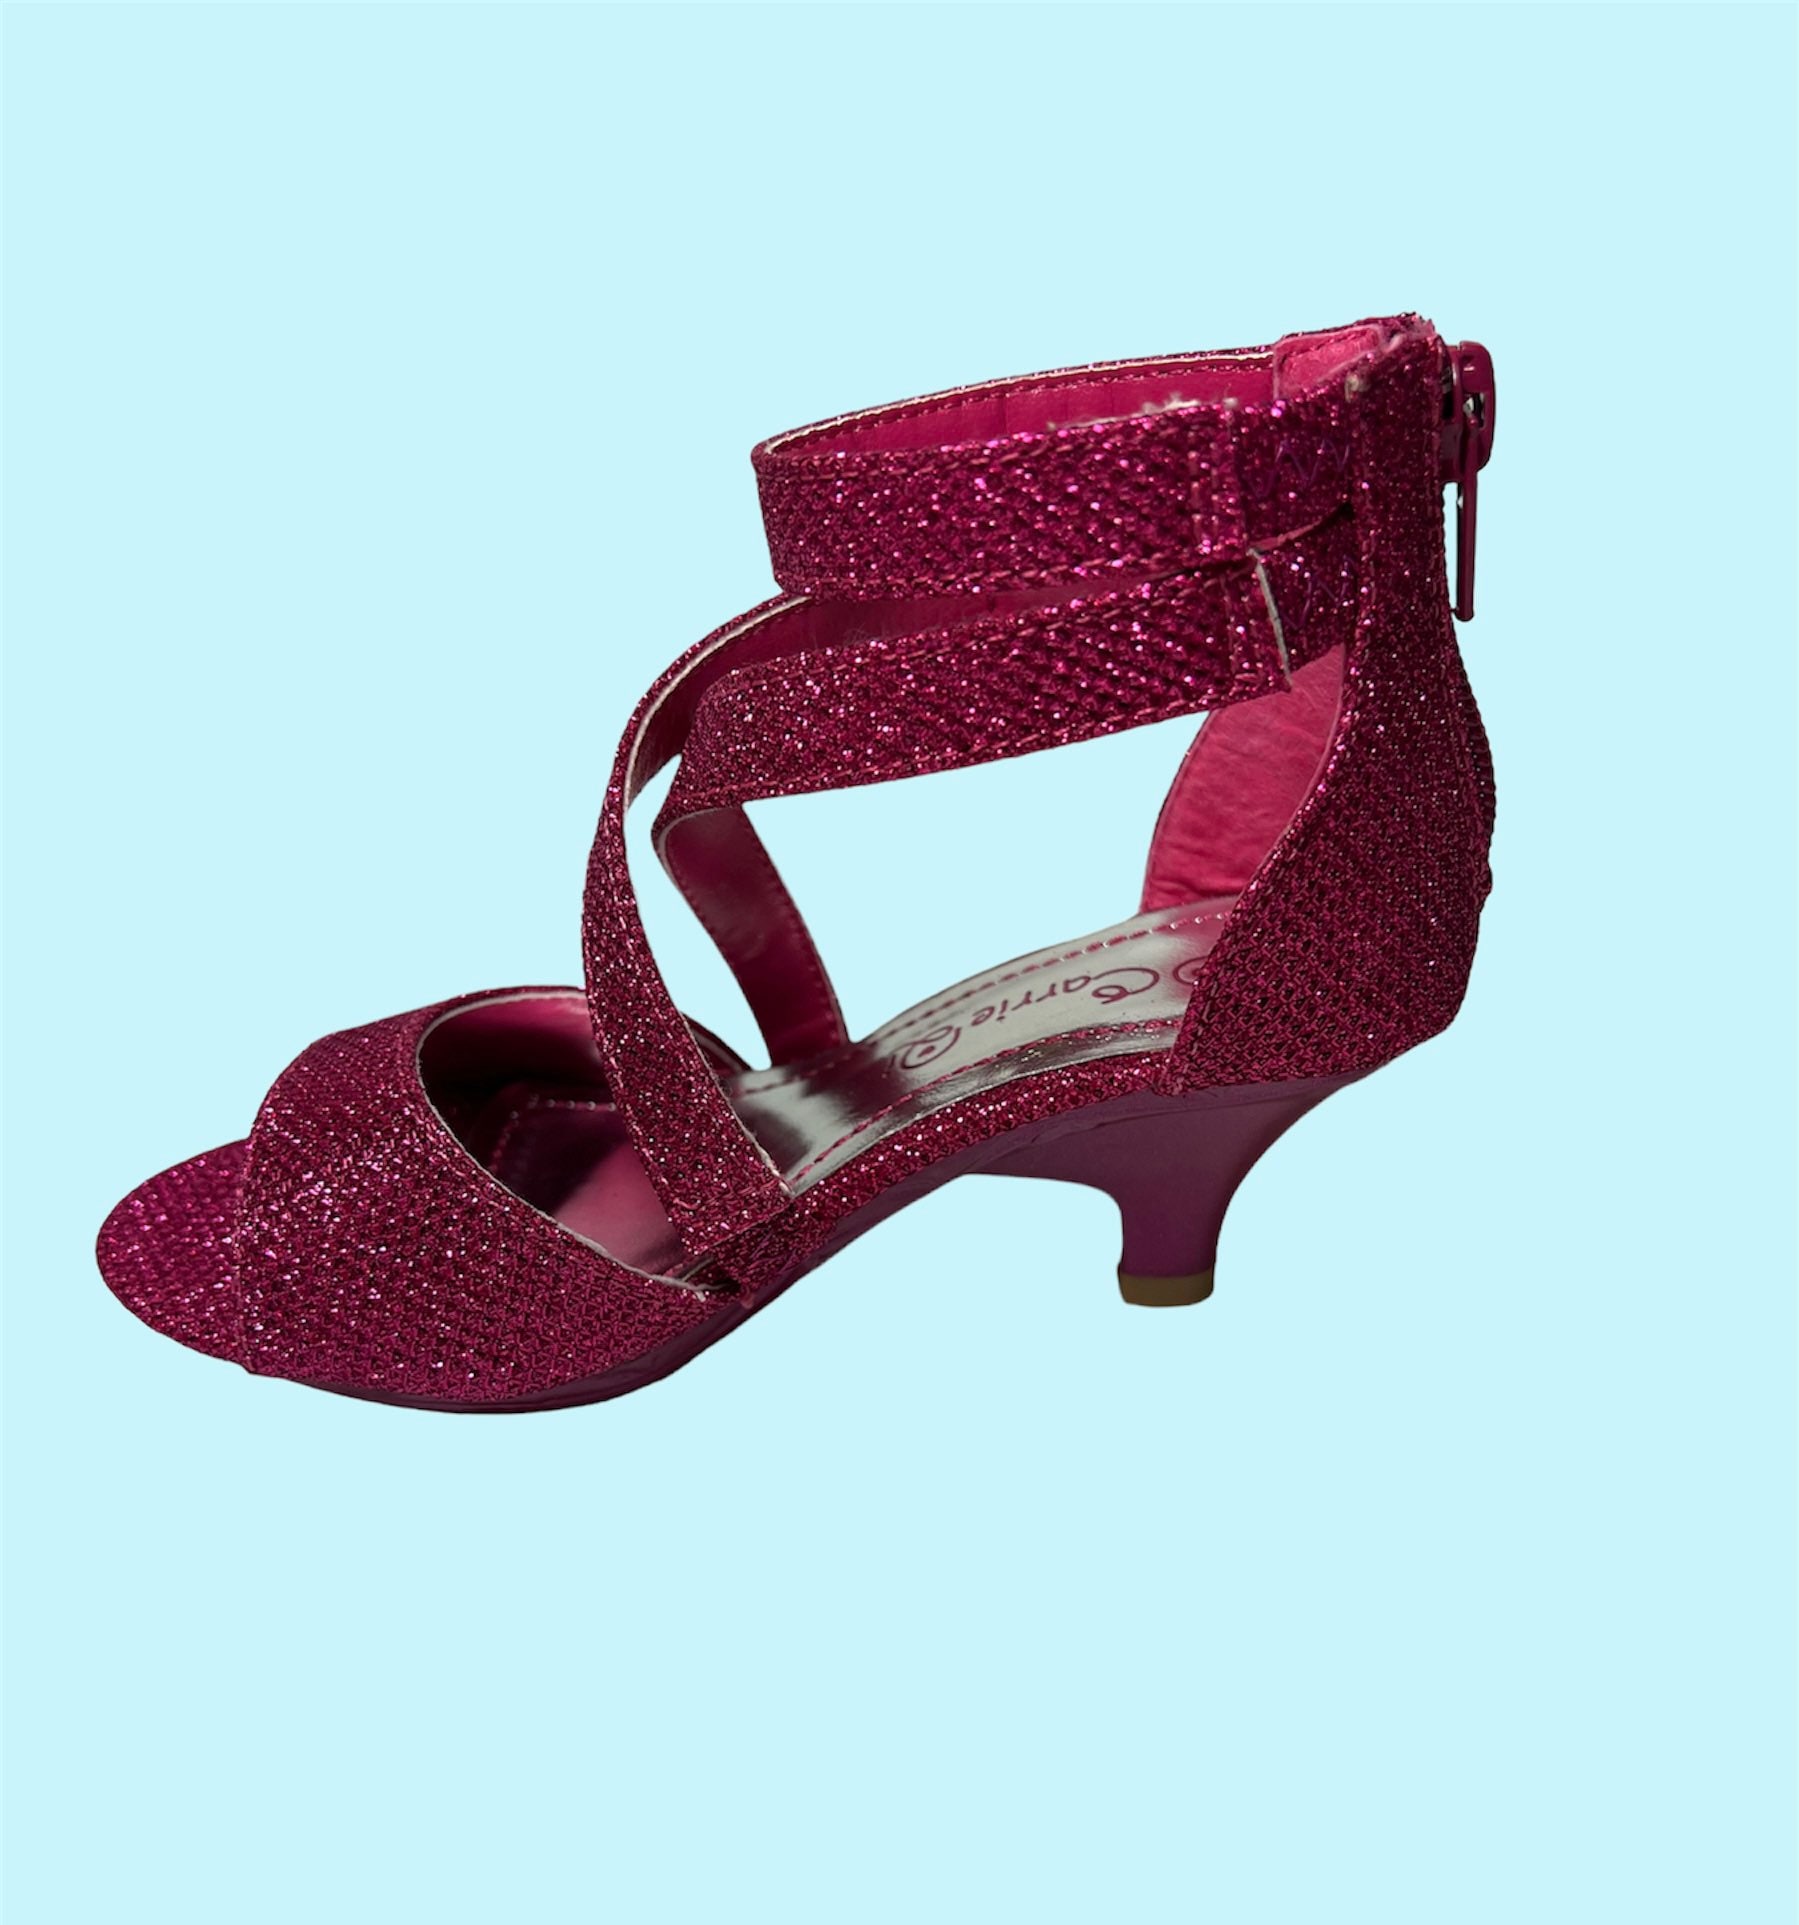 silver heels: Girls' Shoes | Dillard's